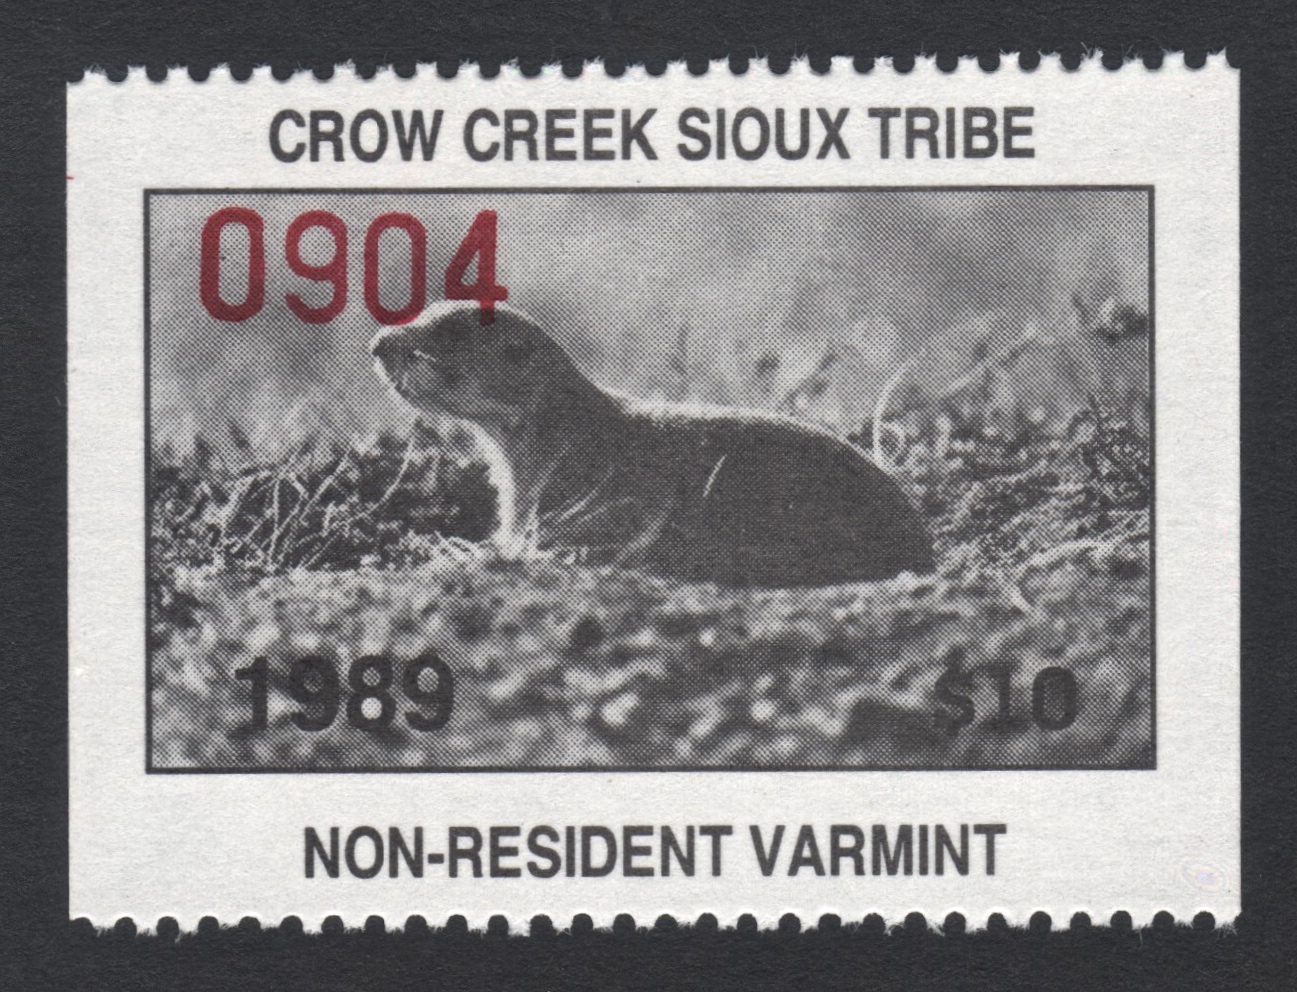 1989 Crow Creek NR Varmint